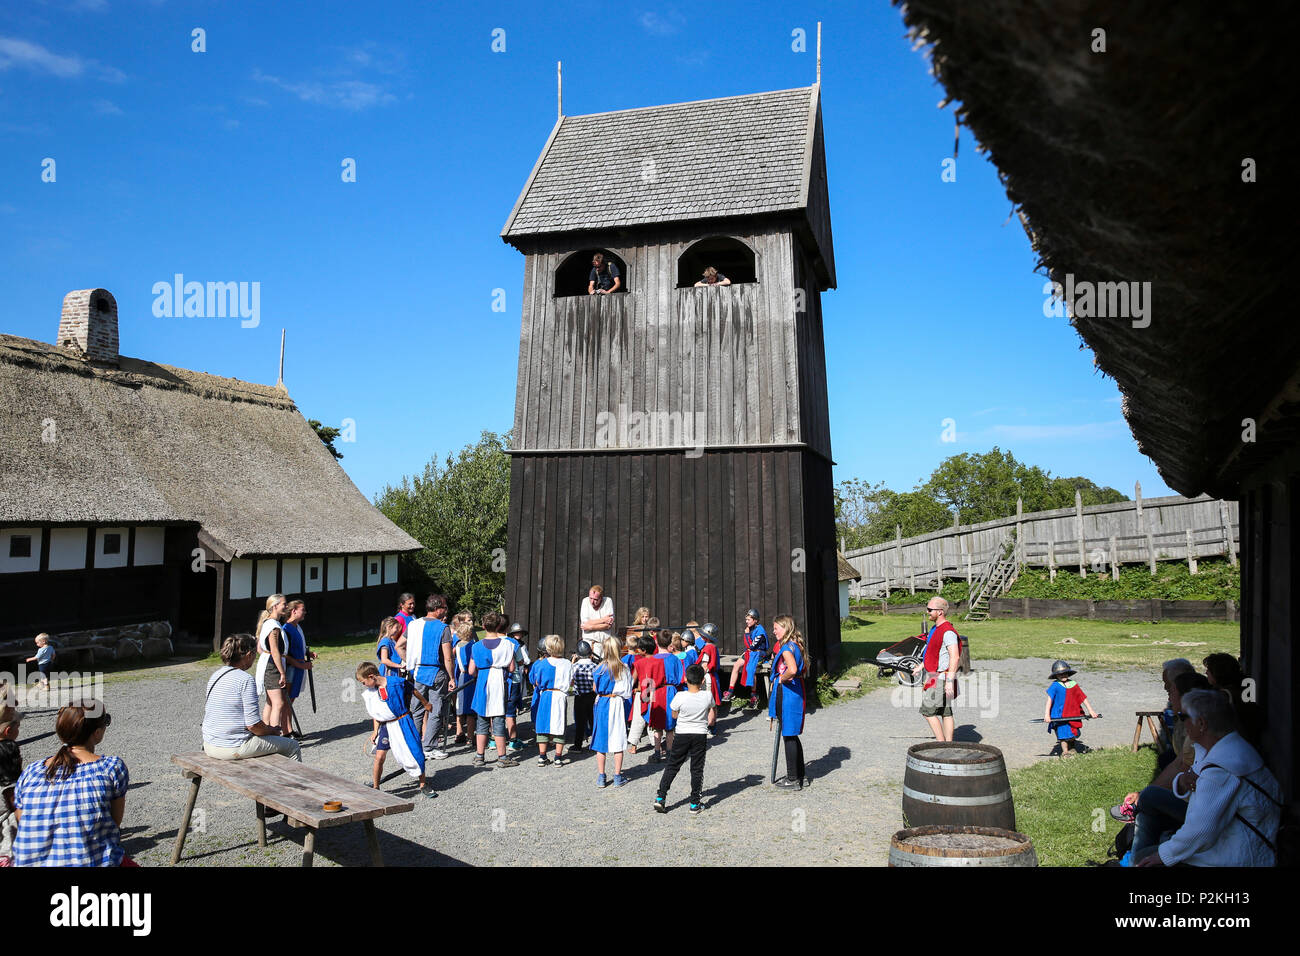 Mittelalter, Mittelalter Dorf, Ostsee, in der Nähe von Gudhjem, Bornholm, Dänemark, Europa Stockfoto